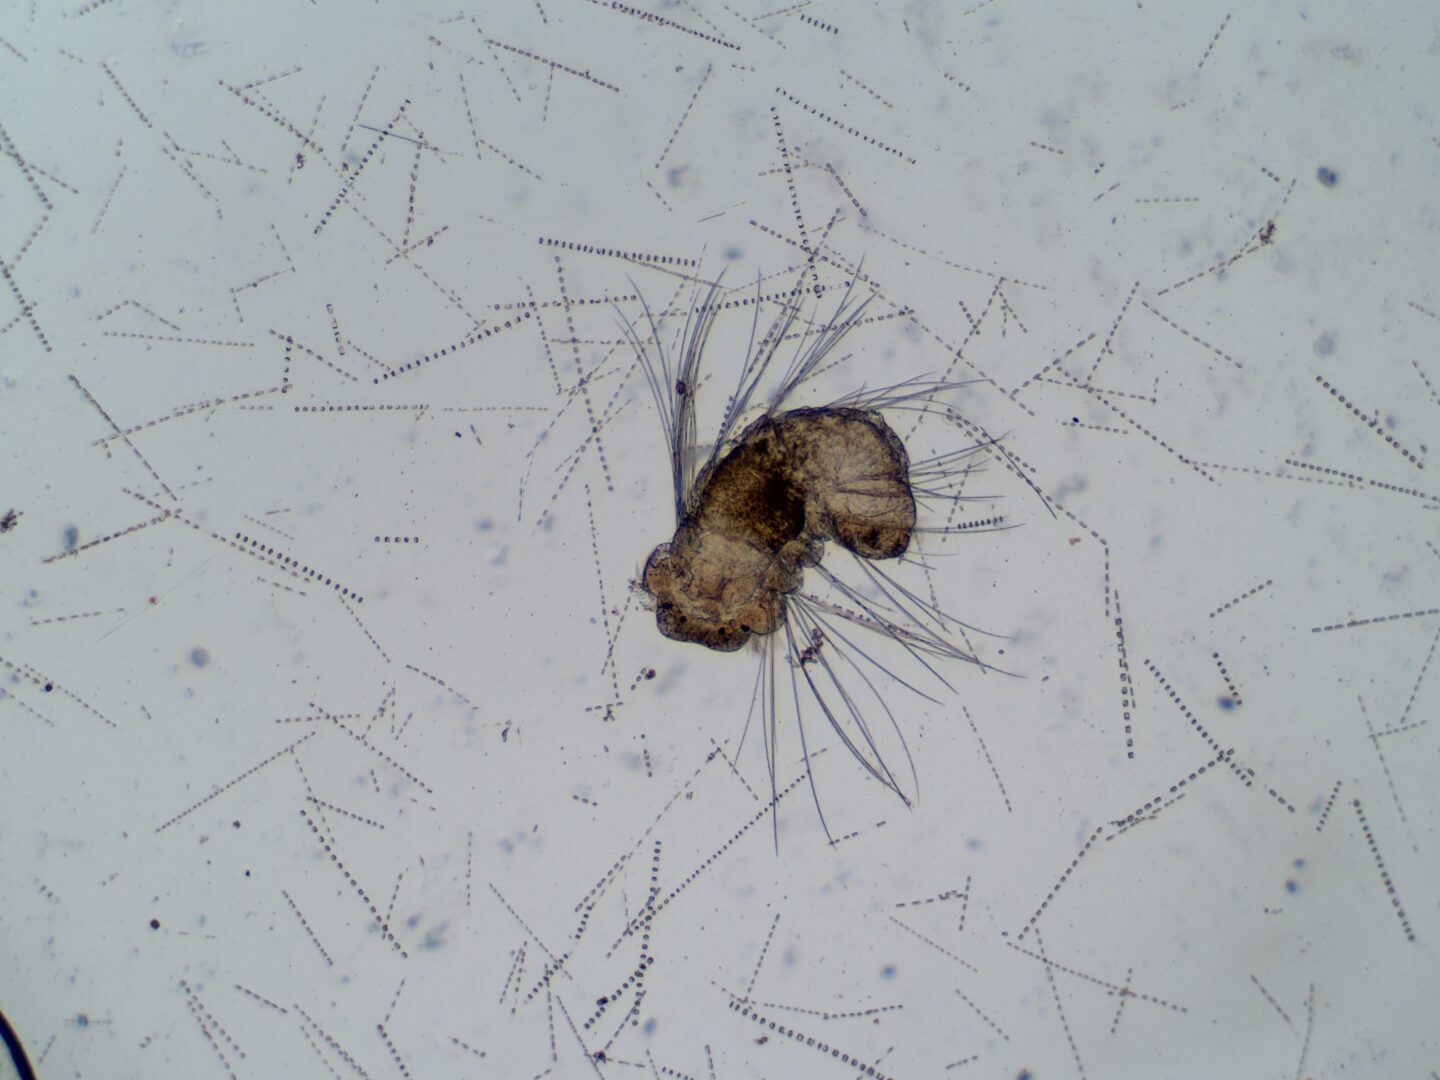 Polychaete worm larvae in plankton sample